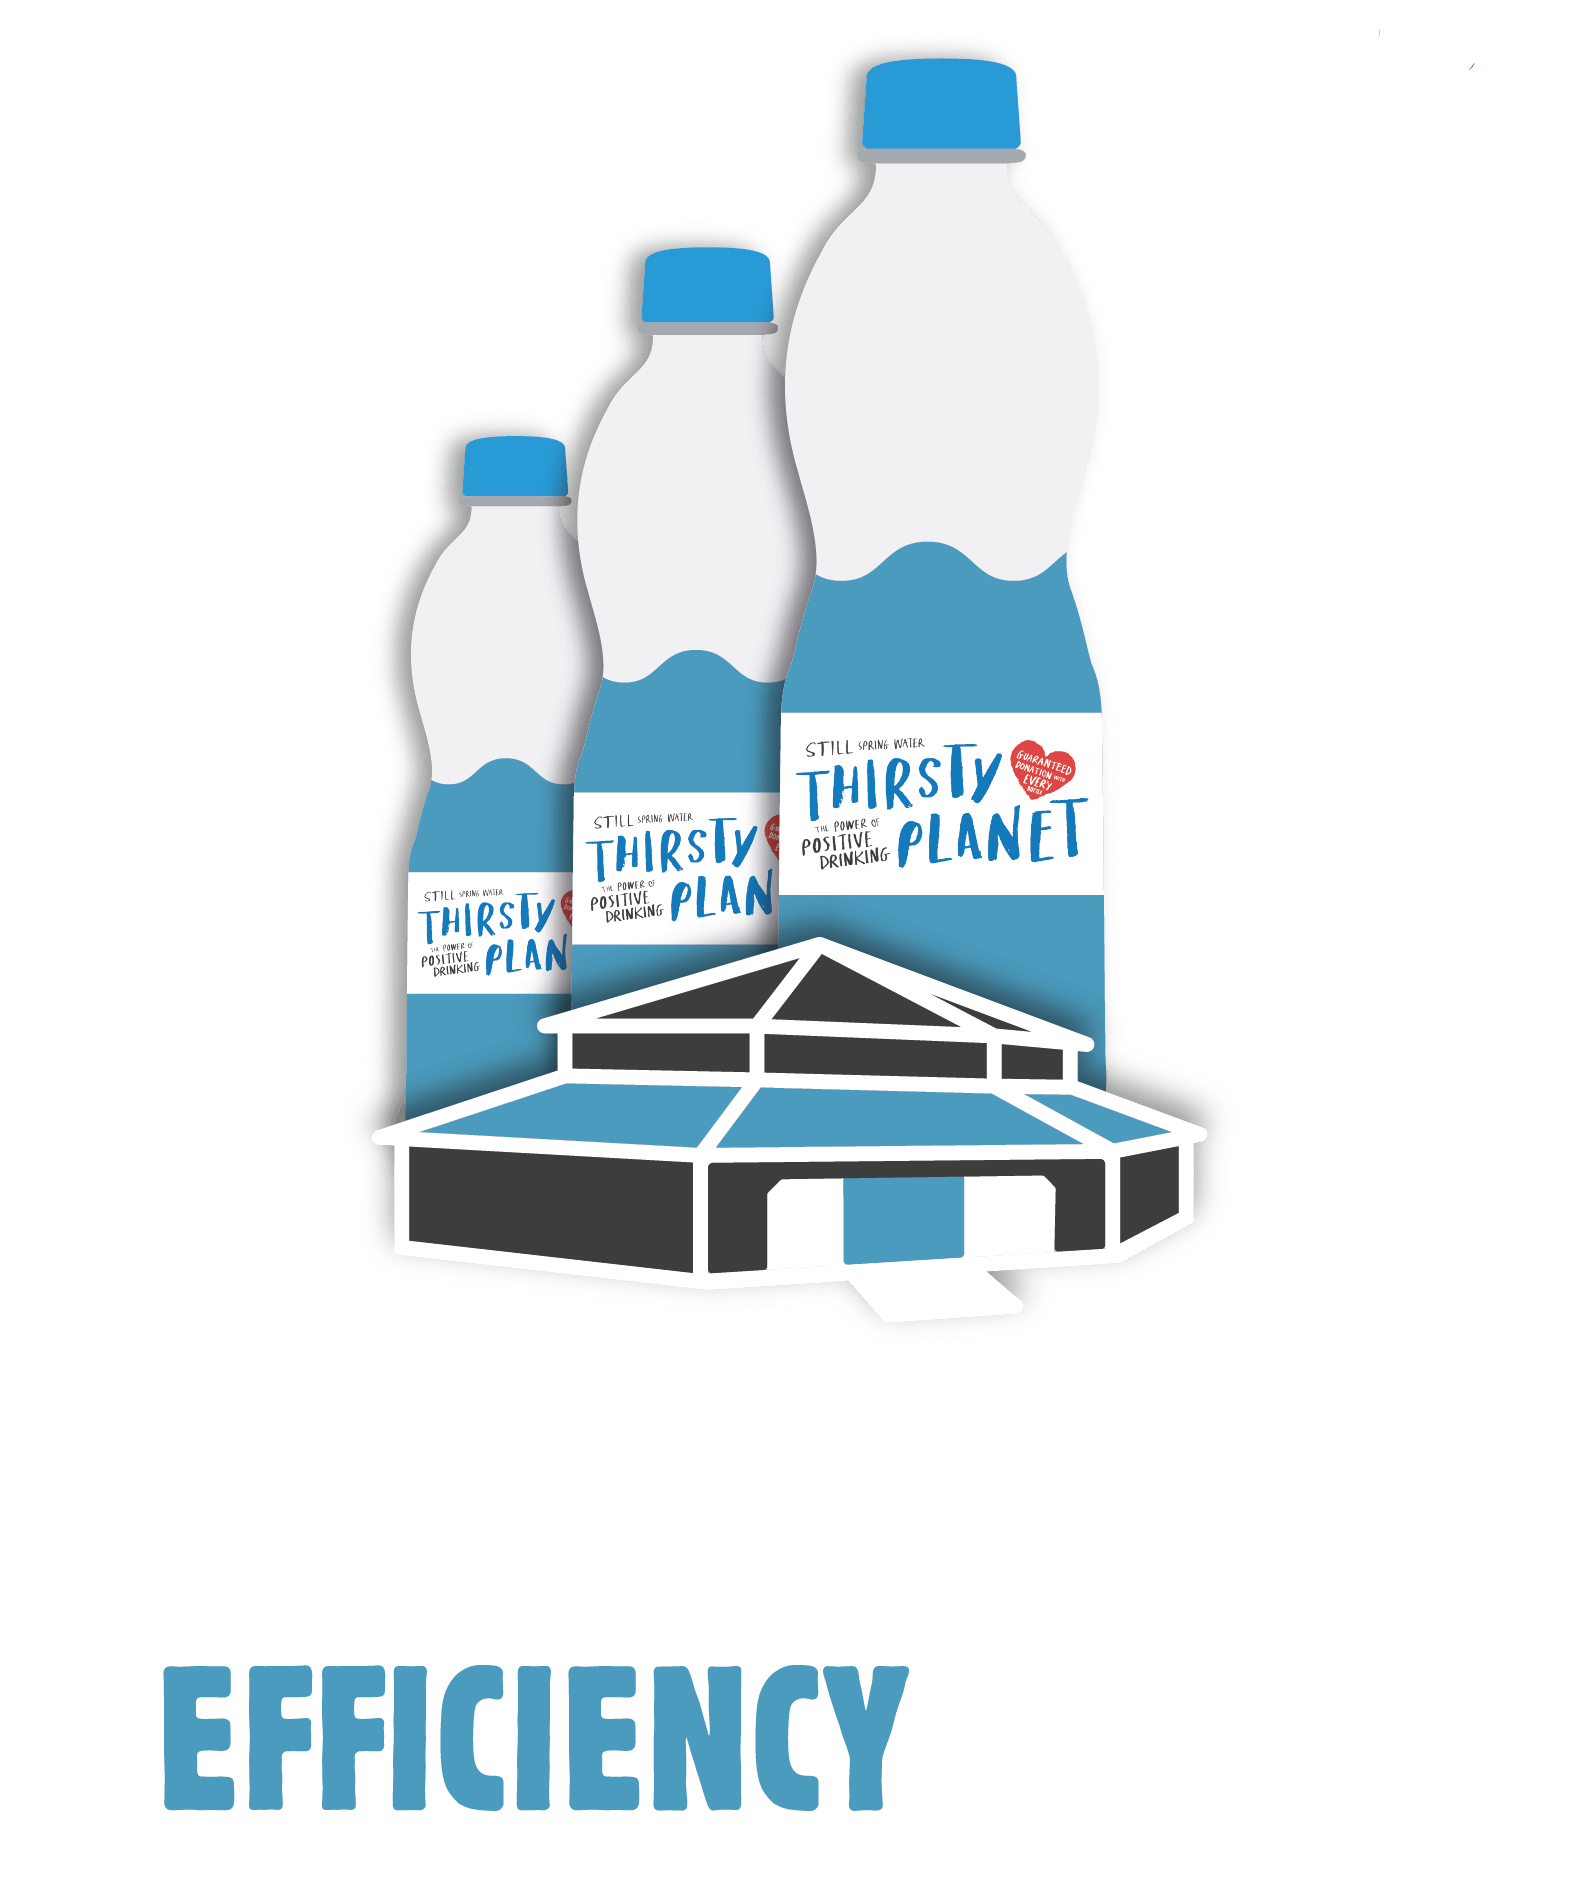 Bottling plant efficiency